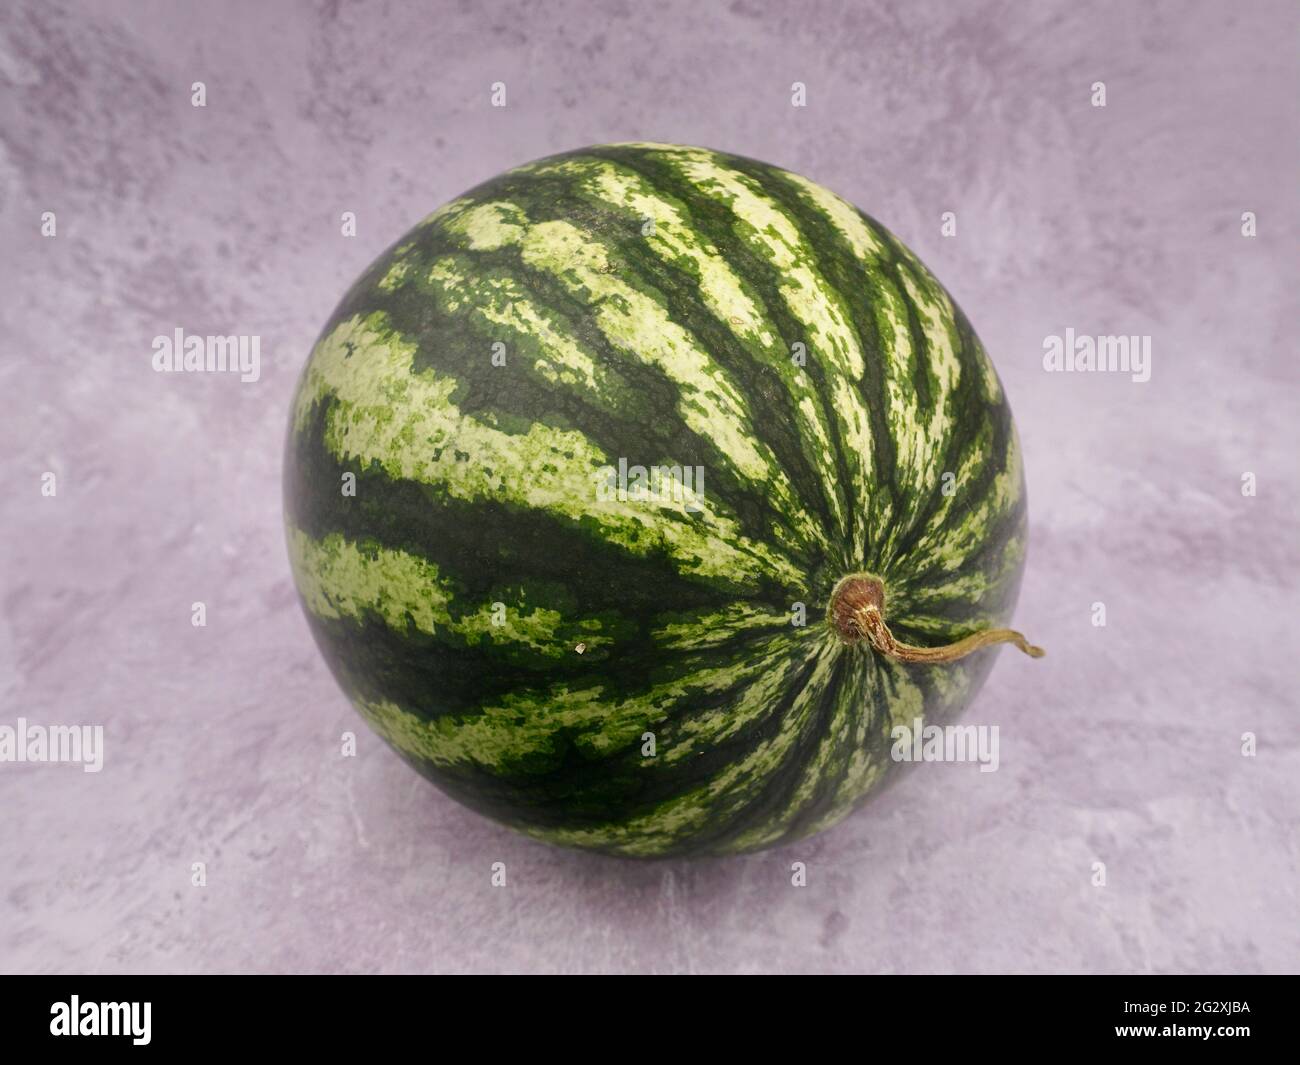 A single whole watermelon (citrullus lanatus) Stock Photo